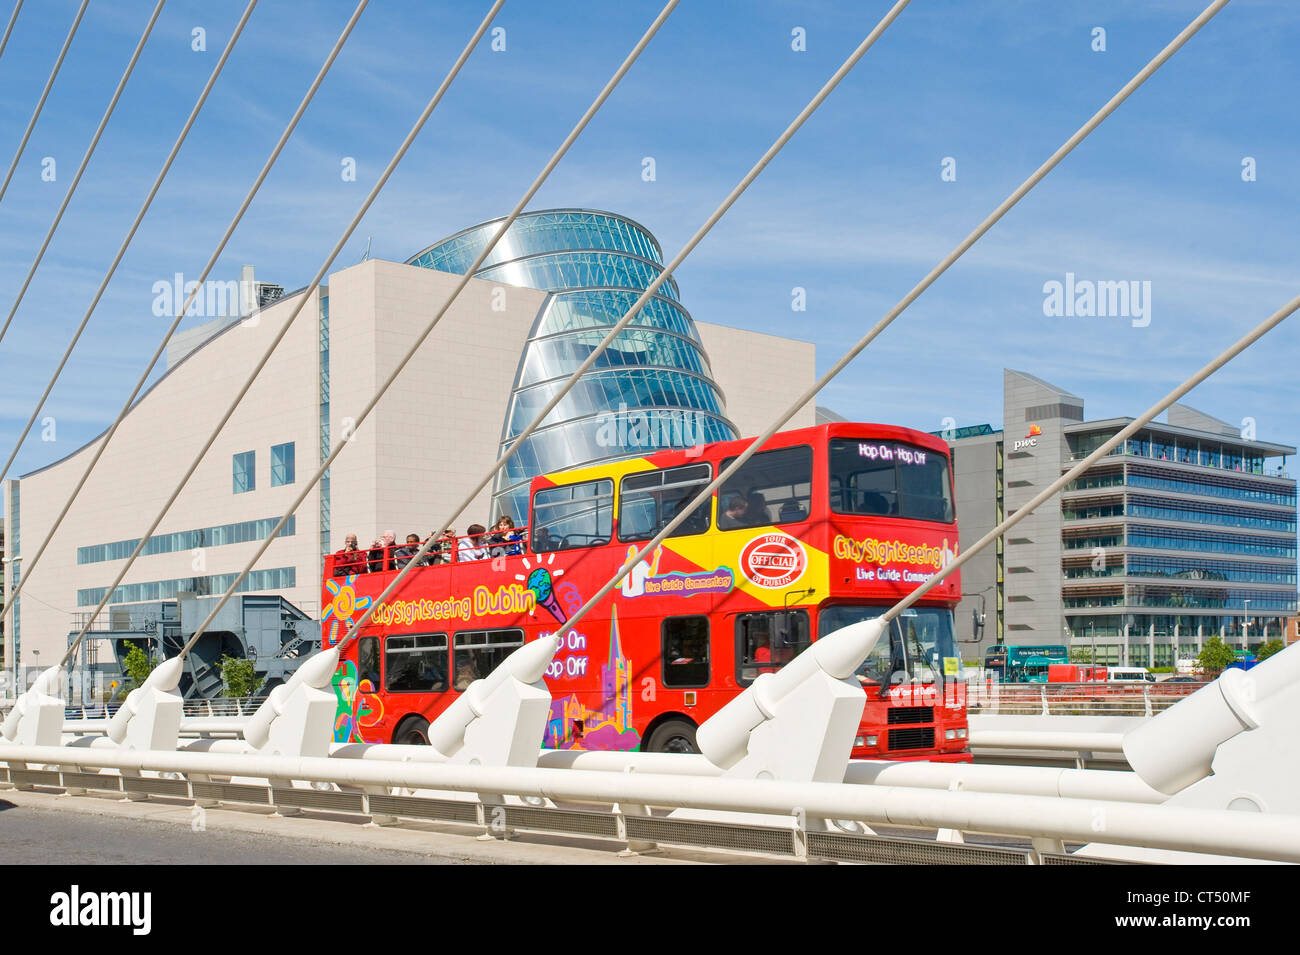 The Samual Beckett Bridge with a Dublin city 'hop on hop off' tour bus driving across. Stock Photo